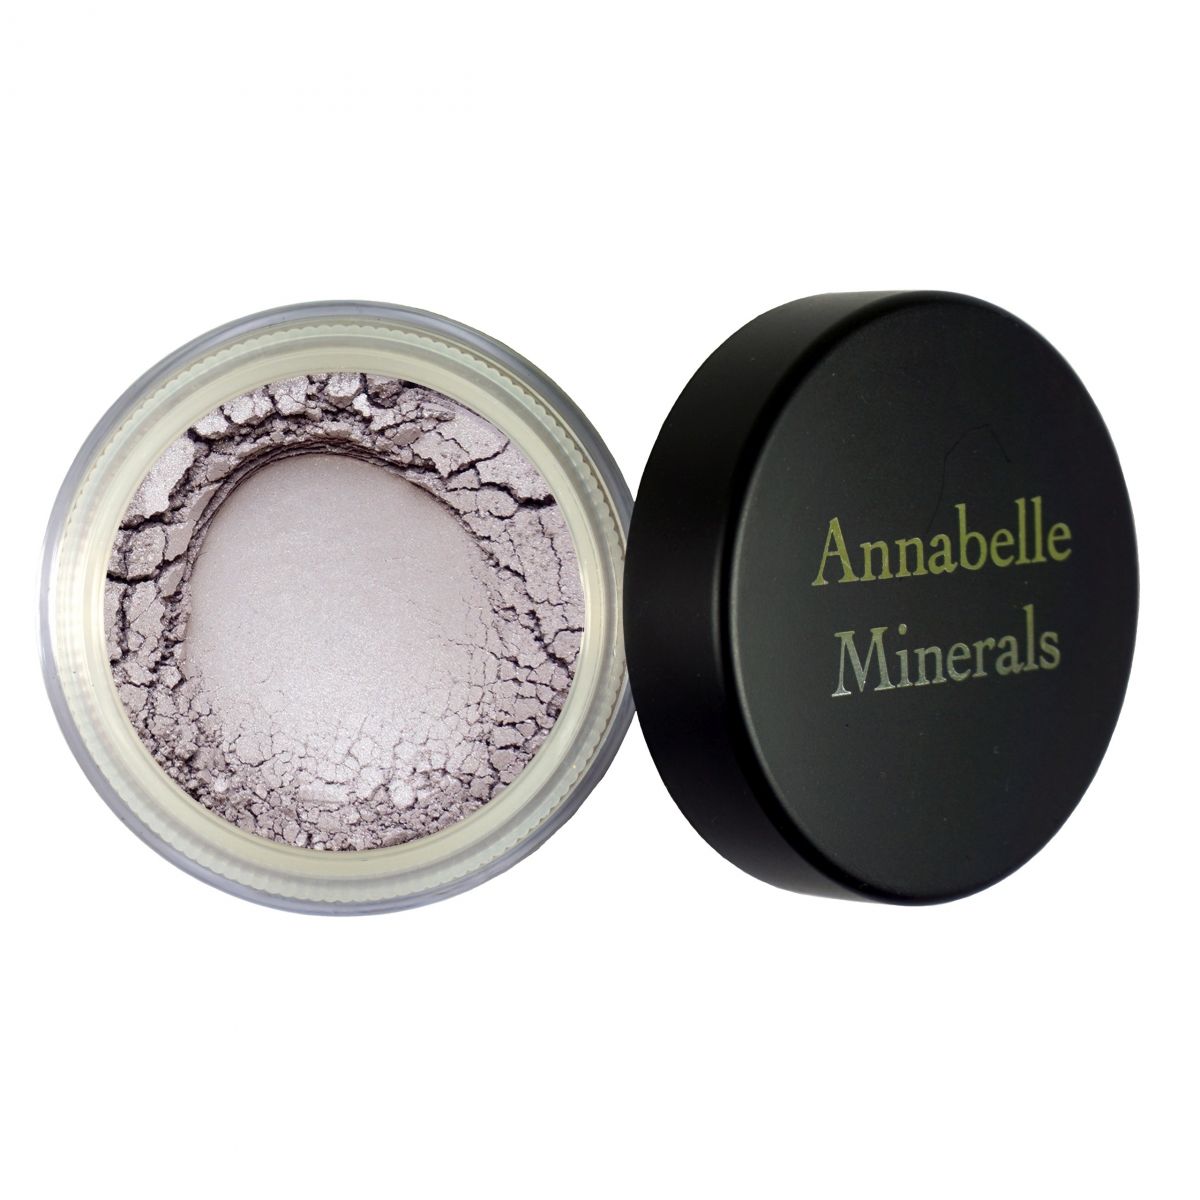 Annabelle Minerals Cień mineralny w odcieniu Chocolate - 3g